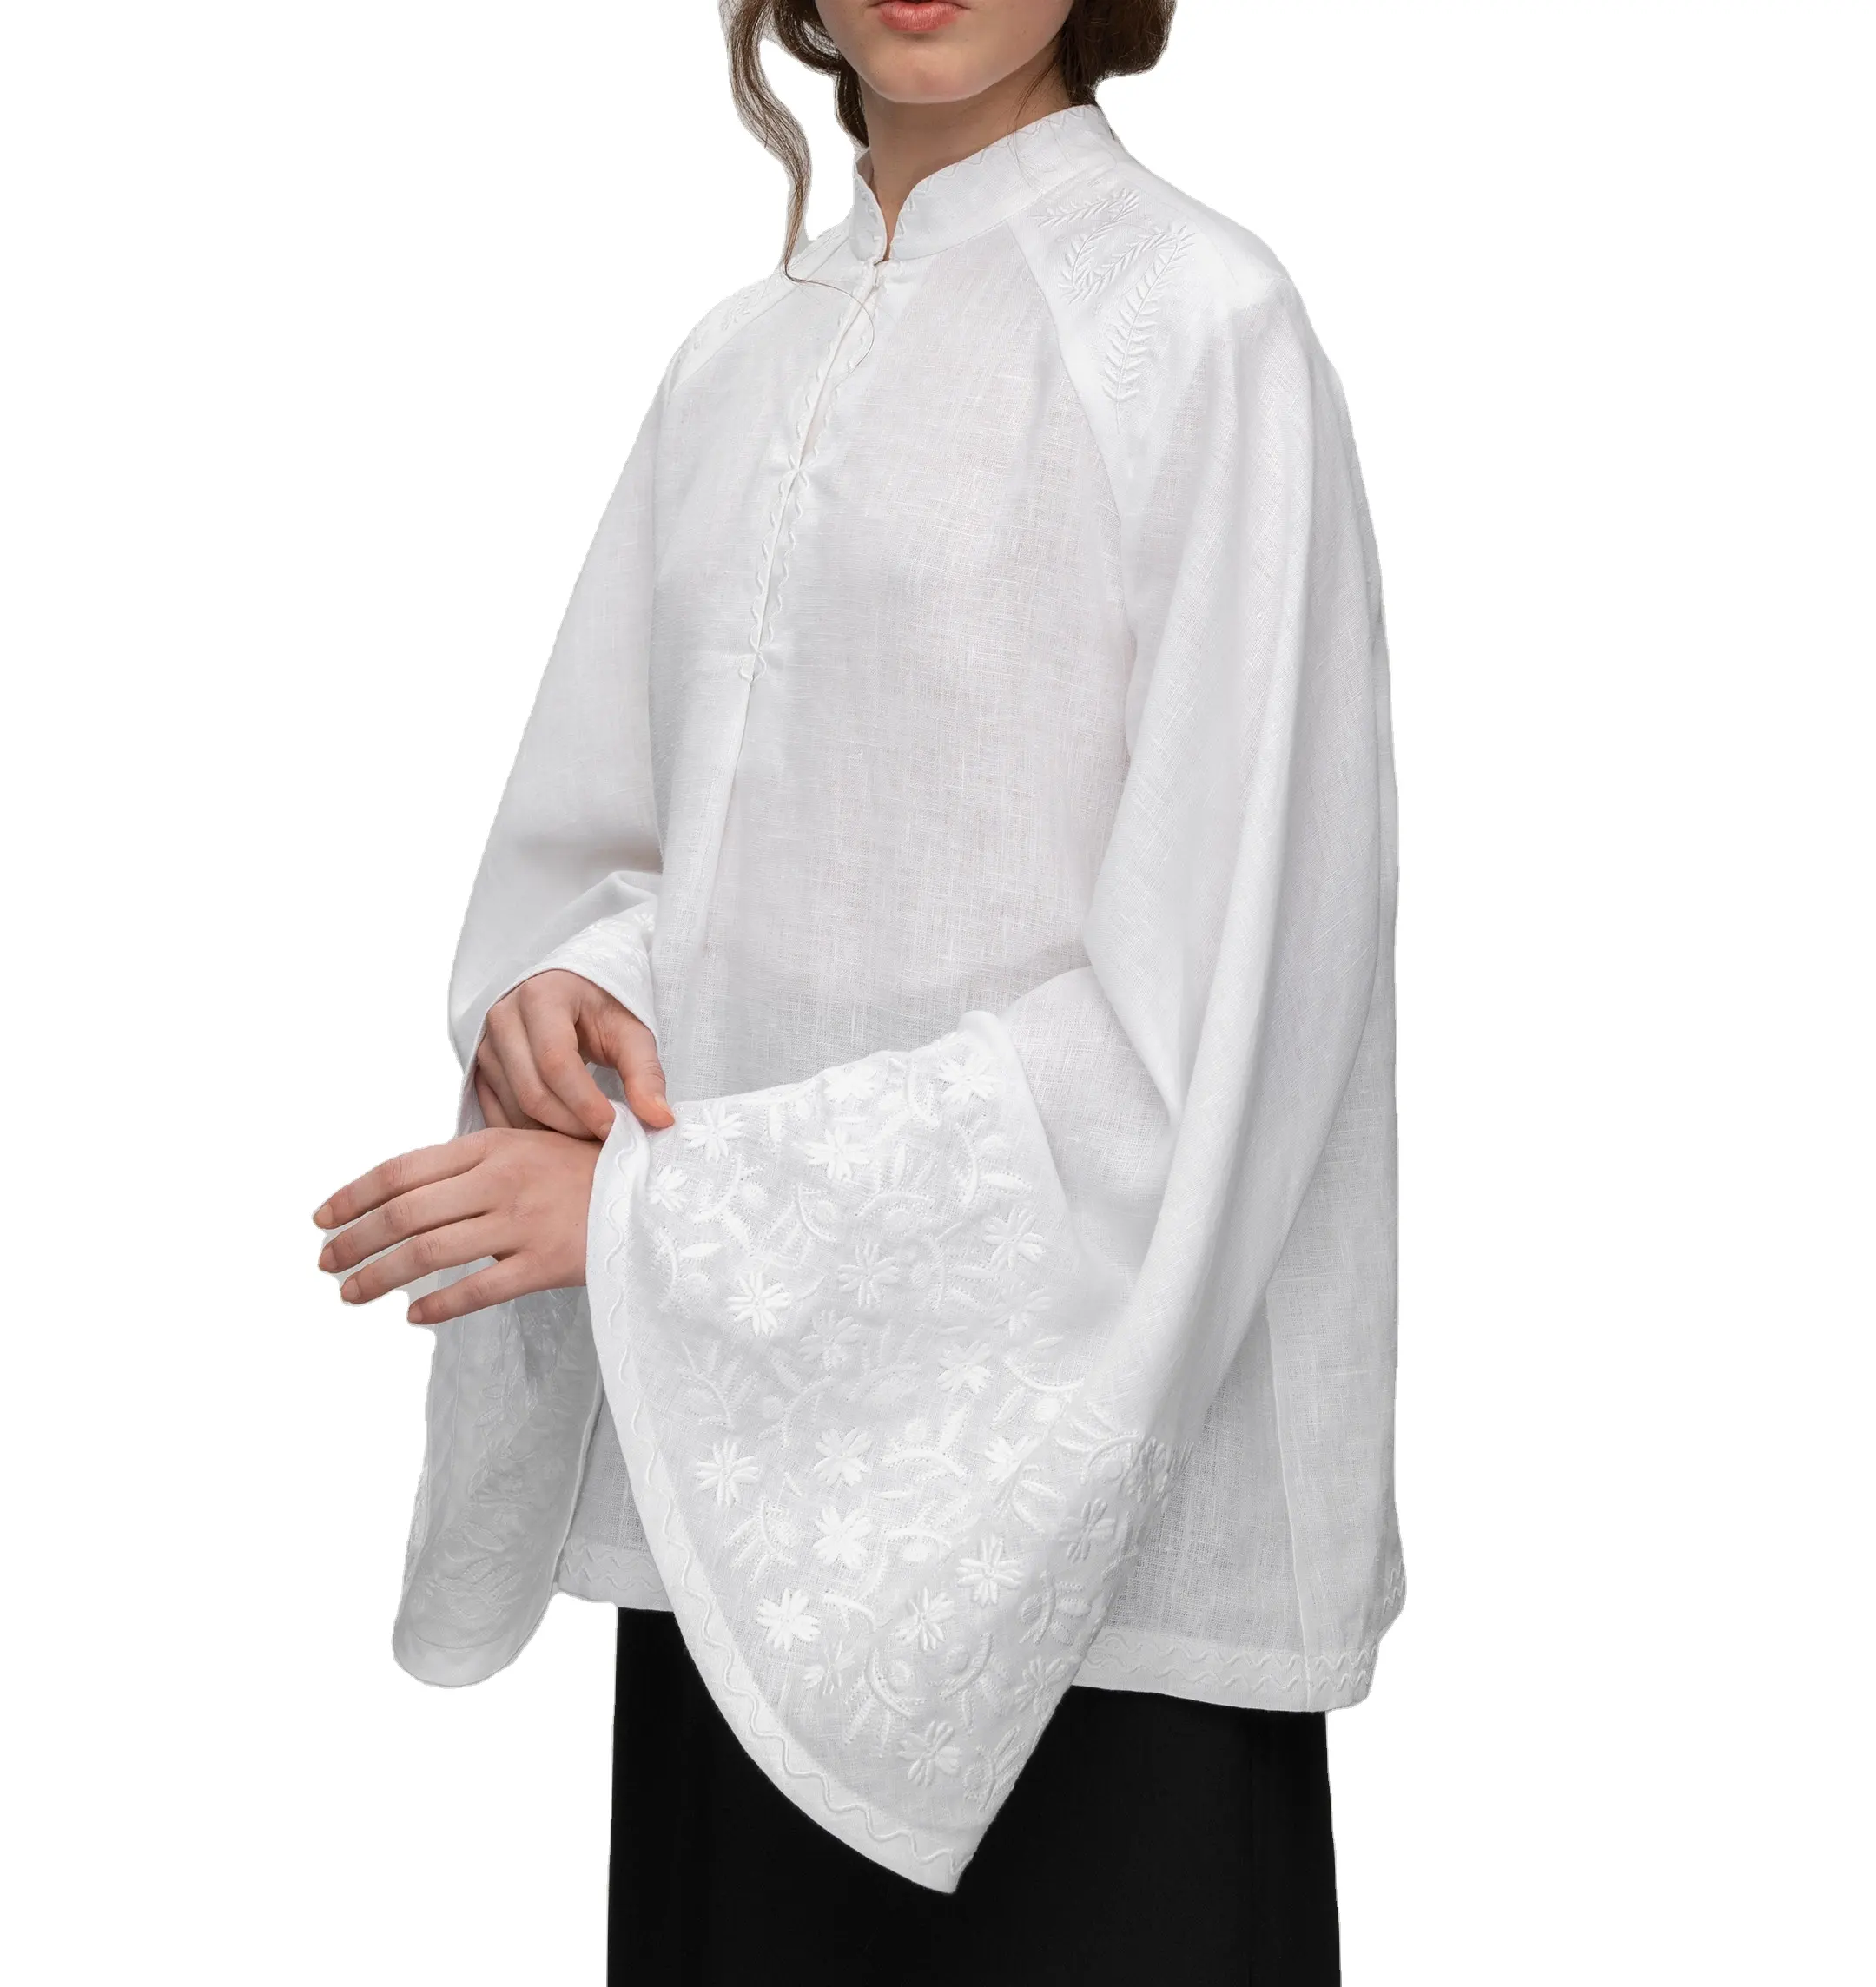 Blusa informal superior para dama, camisas bordadas transpirables personalizadas para mujer